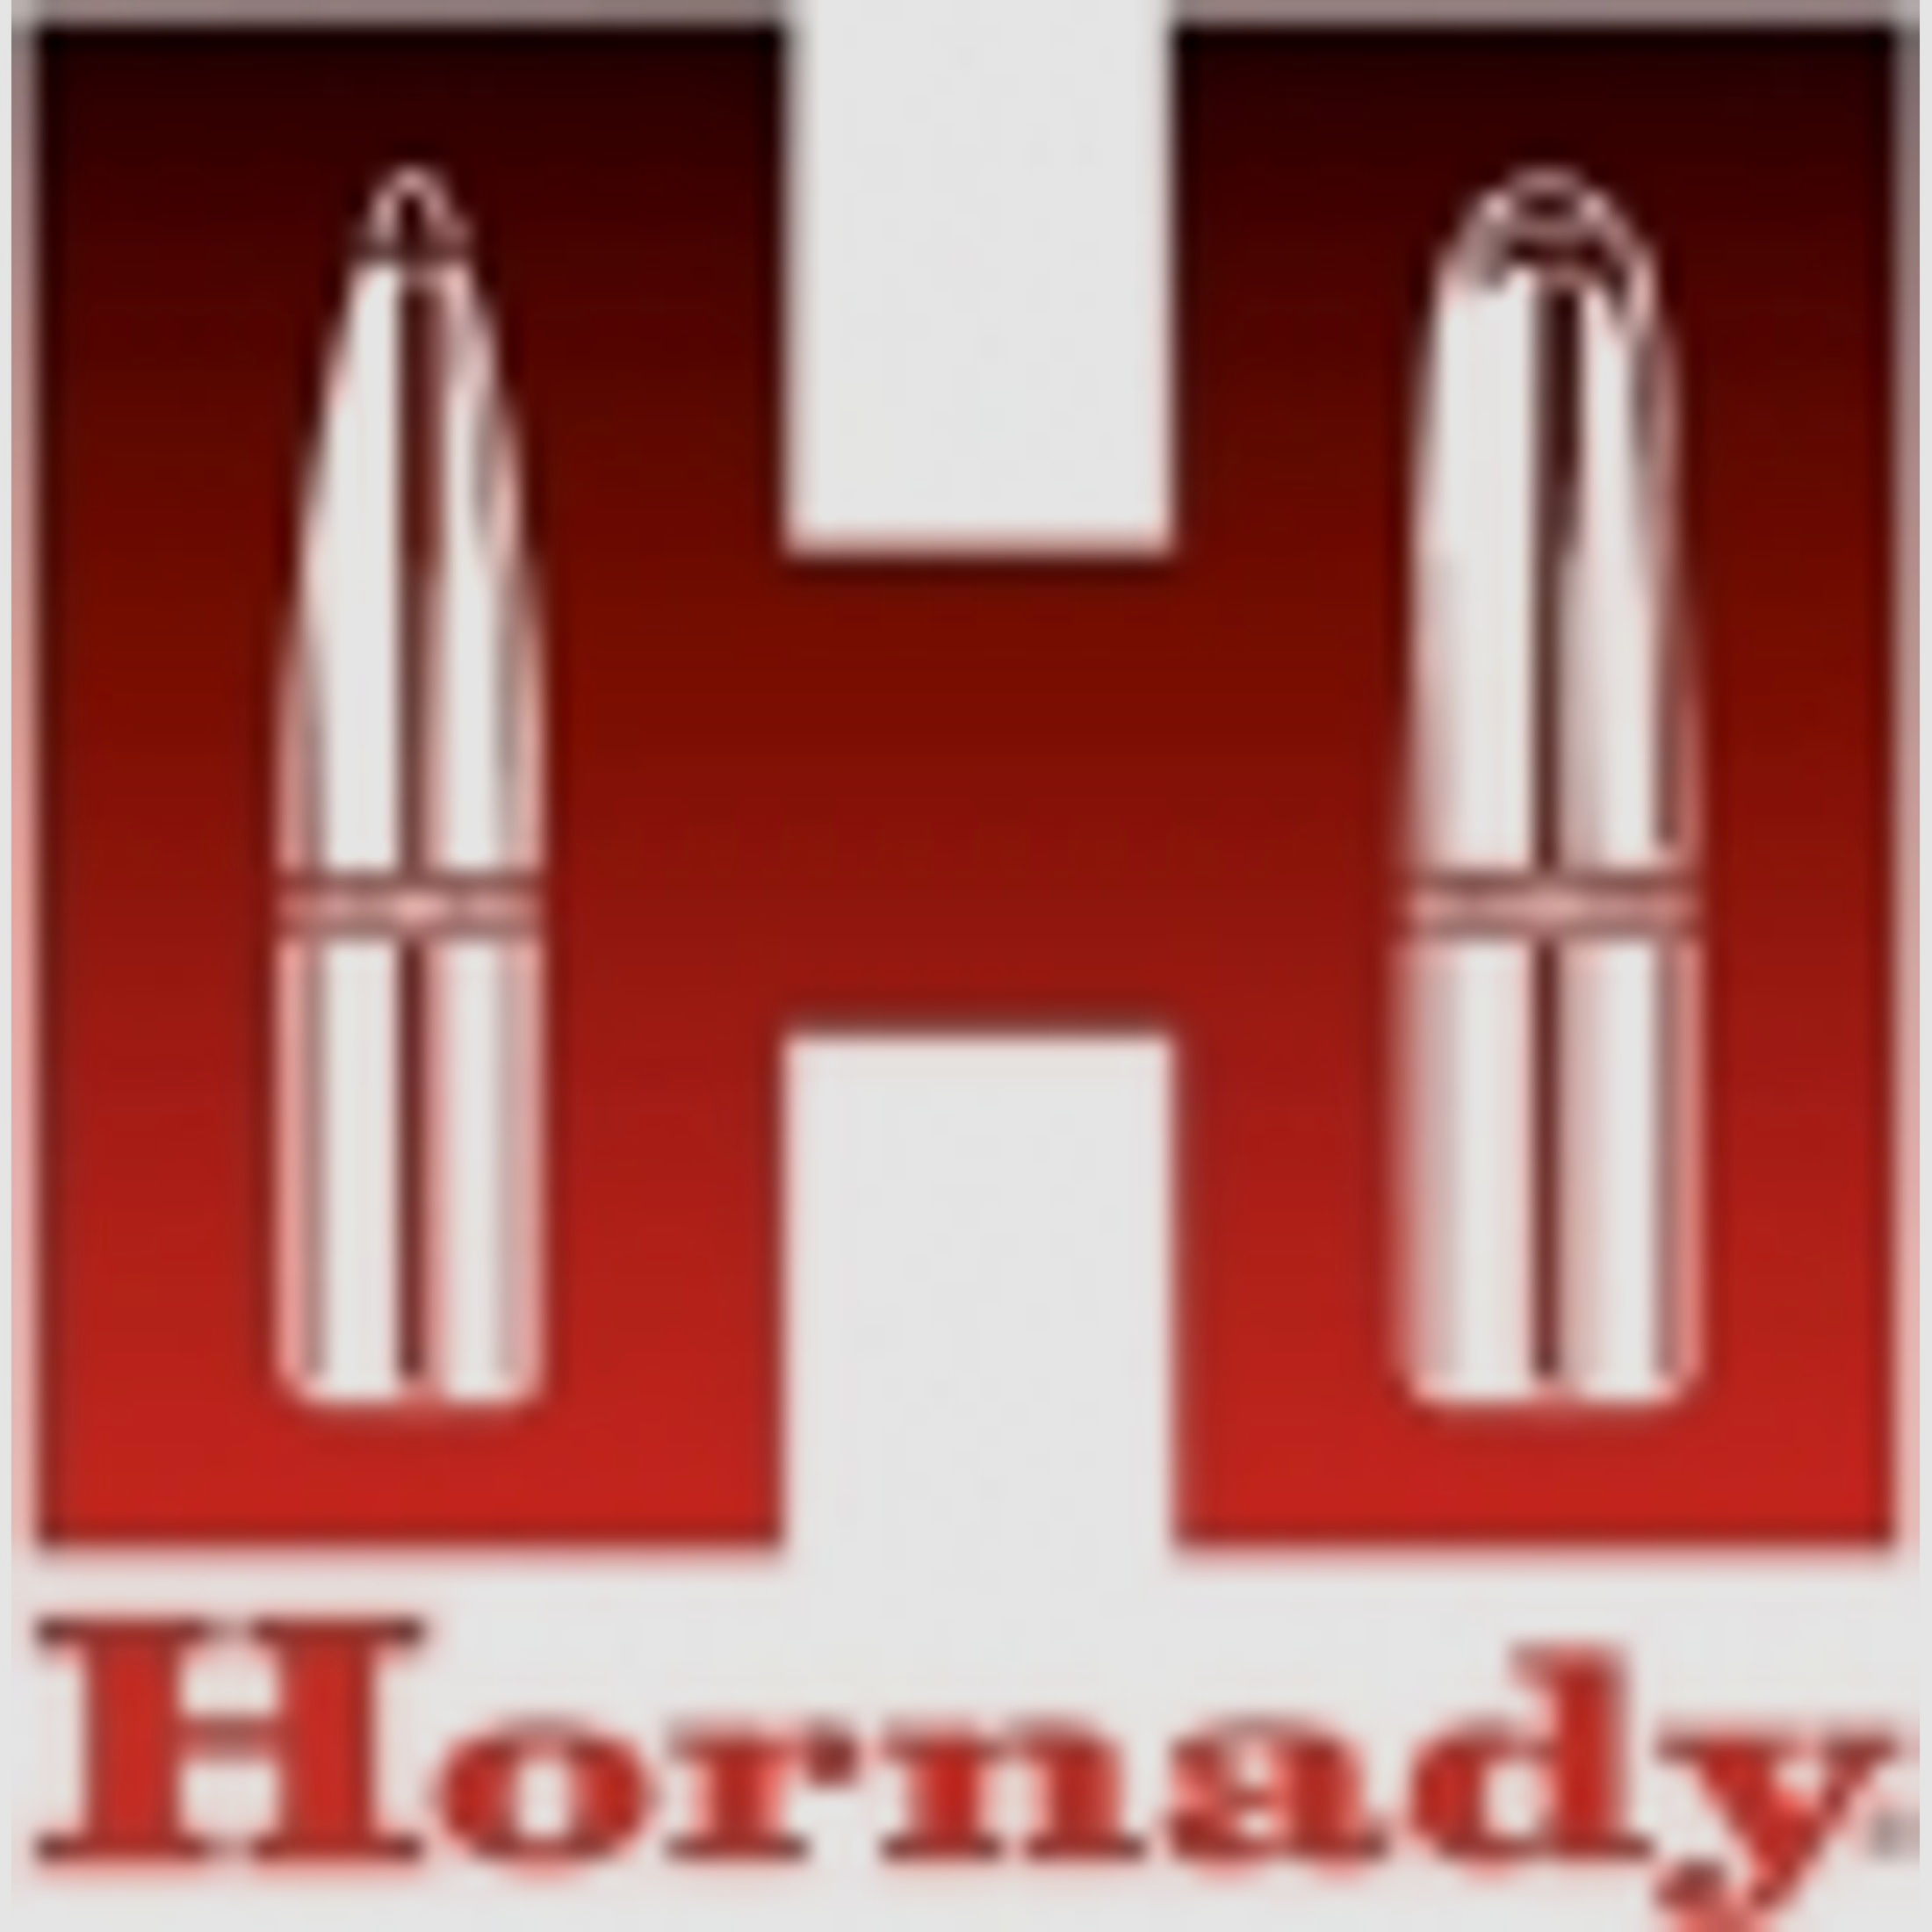 HORNADY 8mm LEBEL REVOLVER MATRIZENSATZ New Dimens